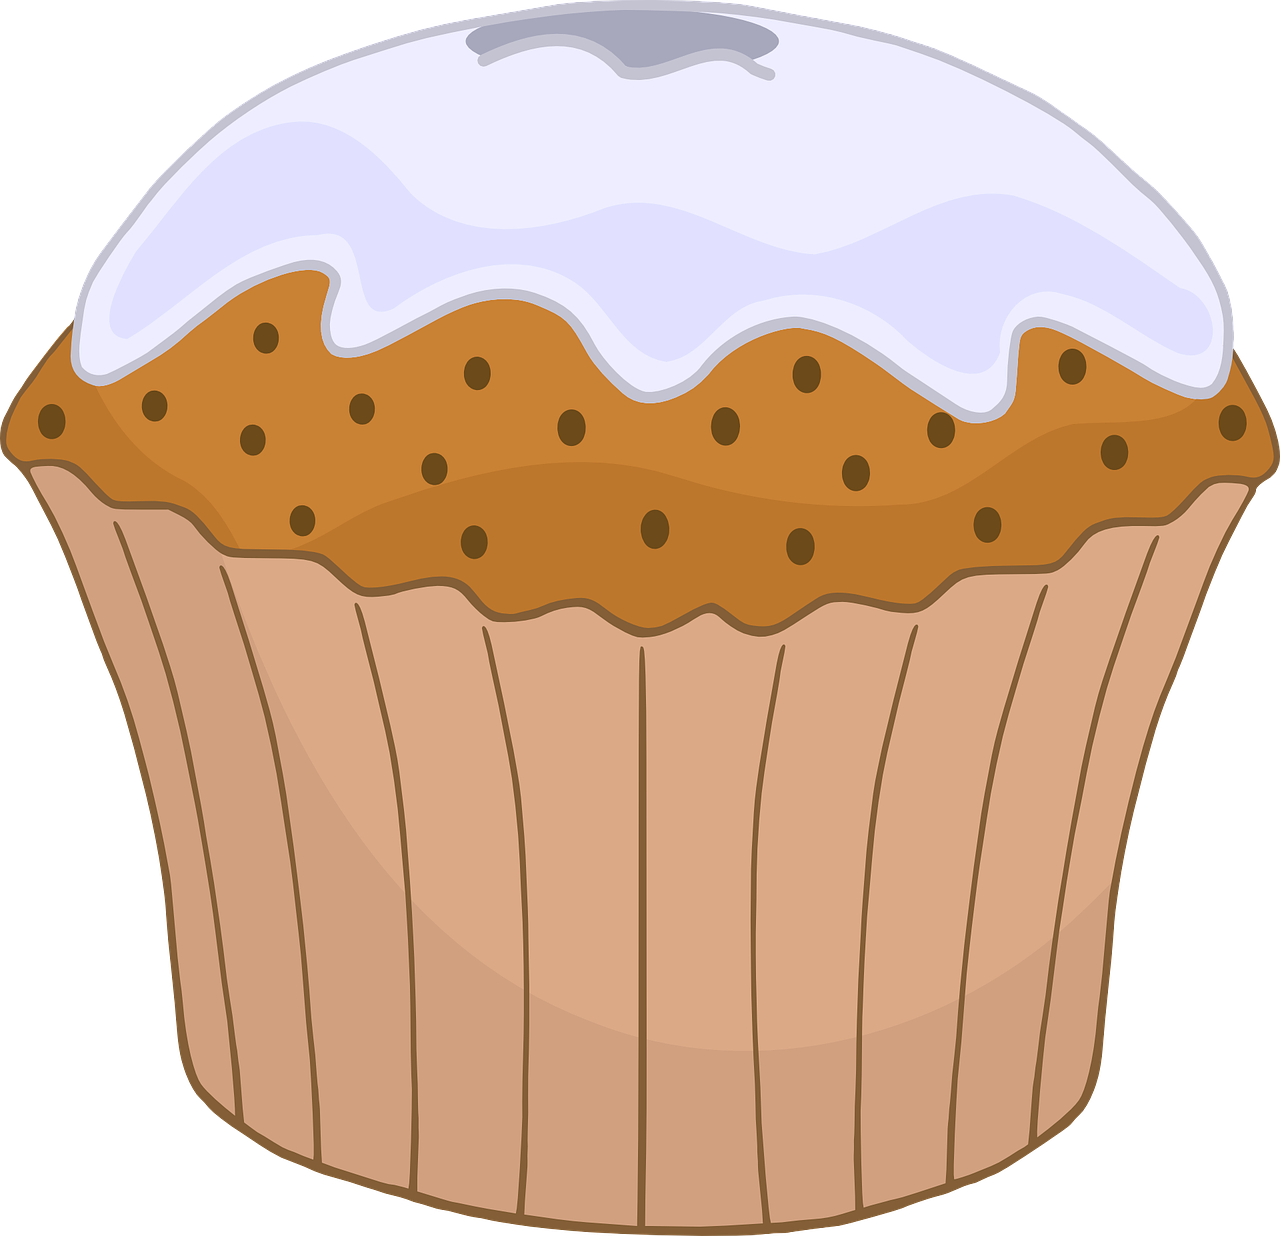 muffin cupcake icing free photo